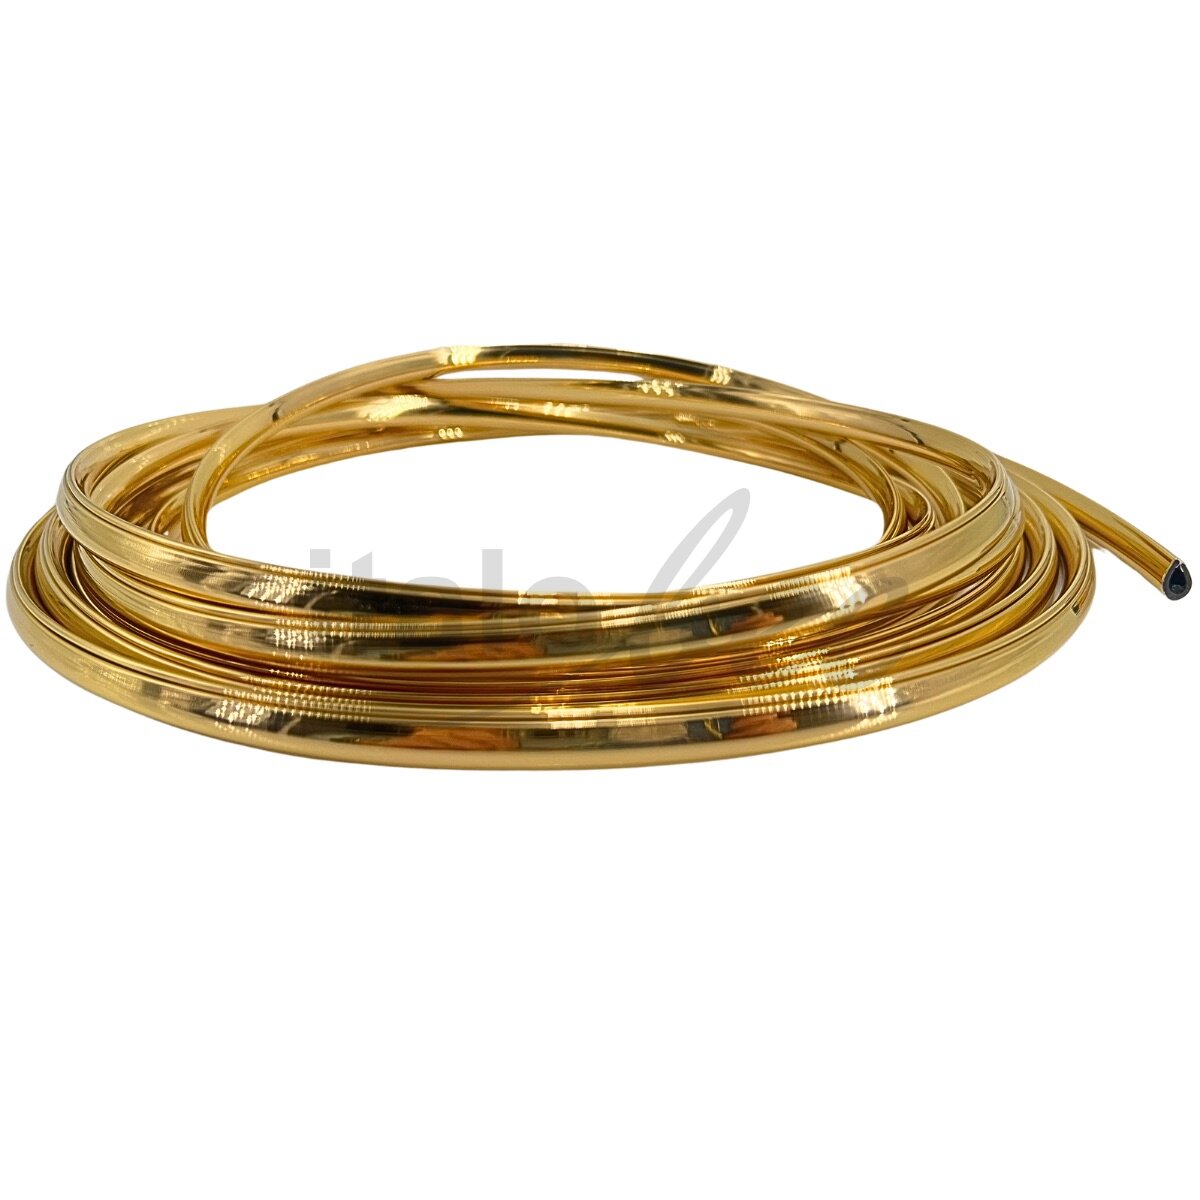 Kantenschutz Kunststoff 10mm in Farbe: gold-Optik, 5 Meter am Stück -,  15,90 €